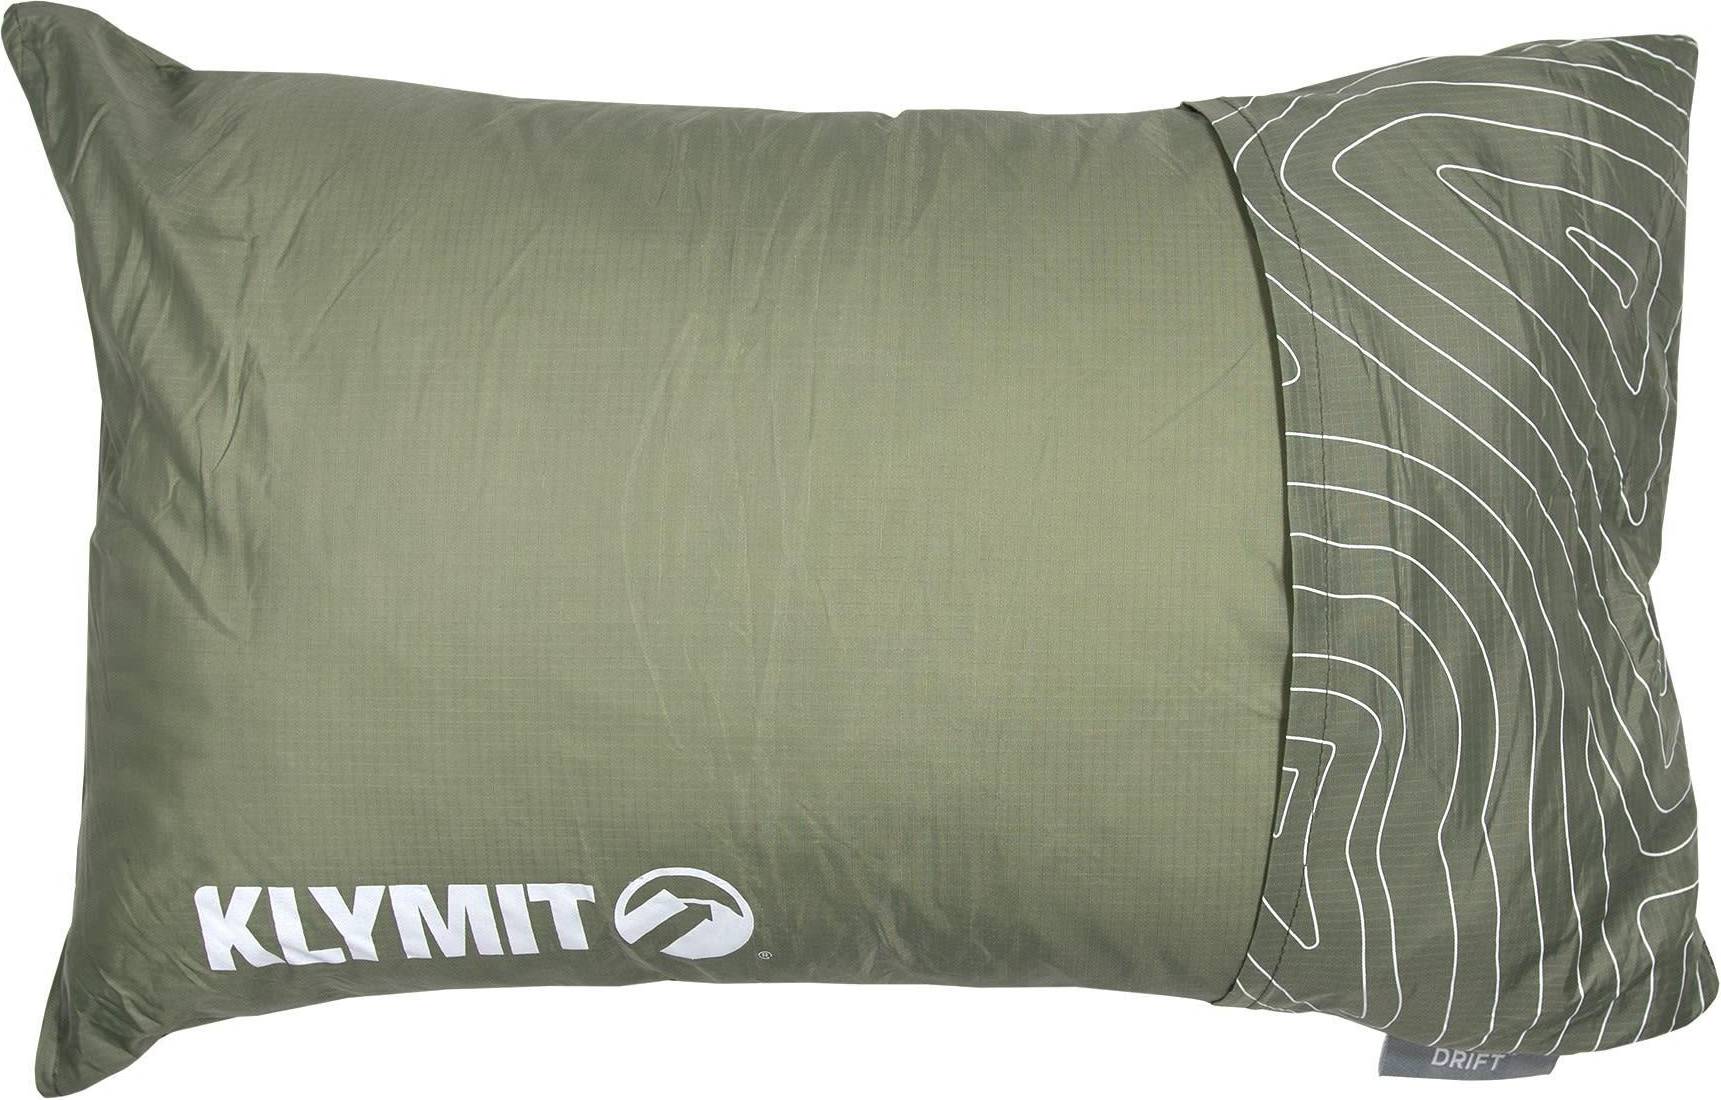  Bild på Klymit lägerkudde Drift Camp Regular 46 cm polyester/bomull liggunderlag